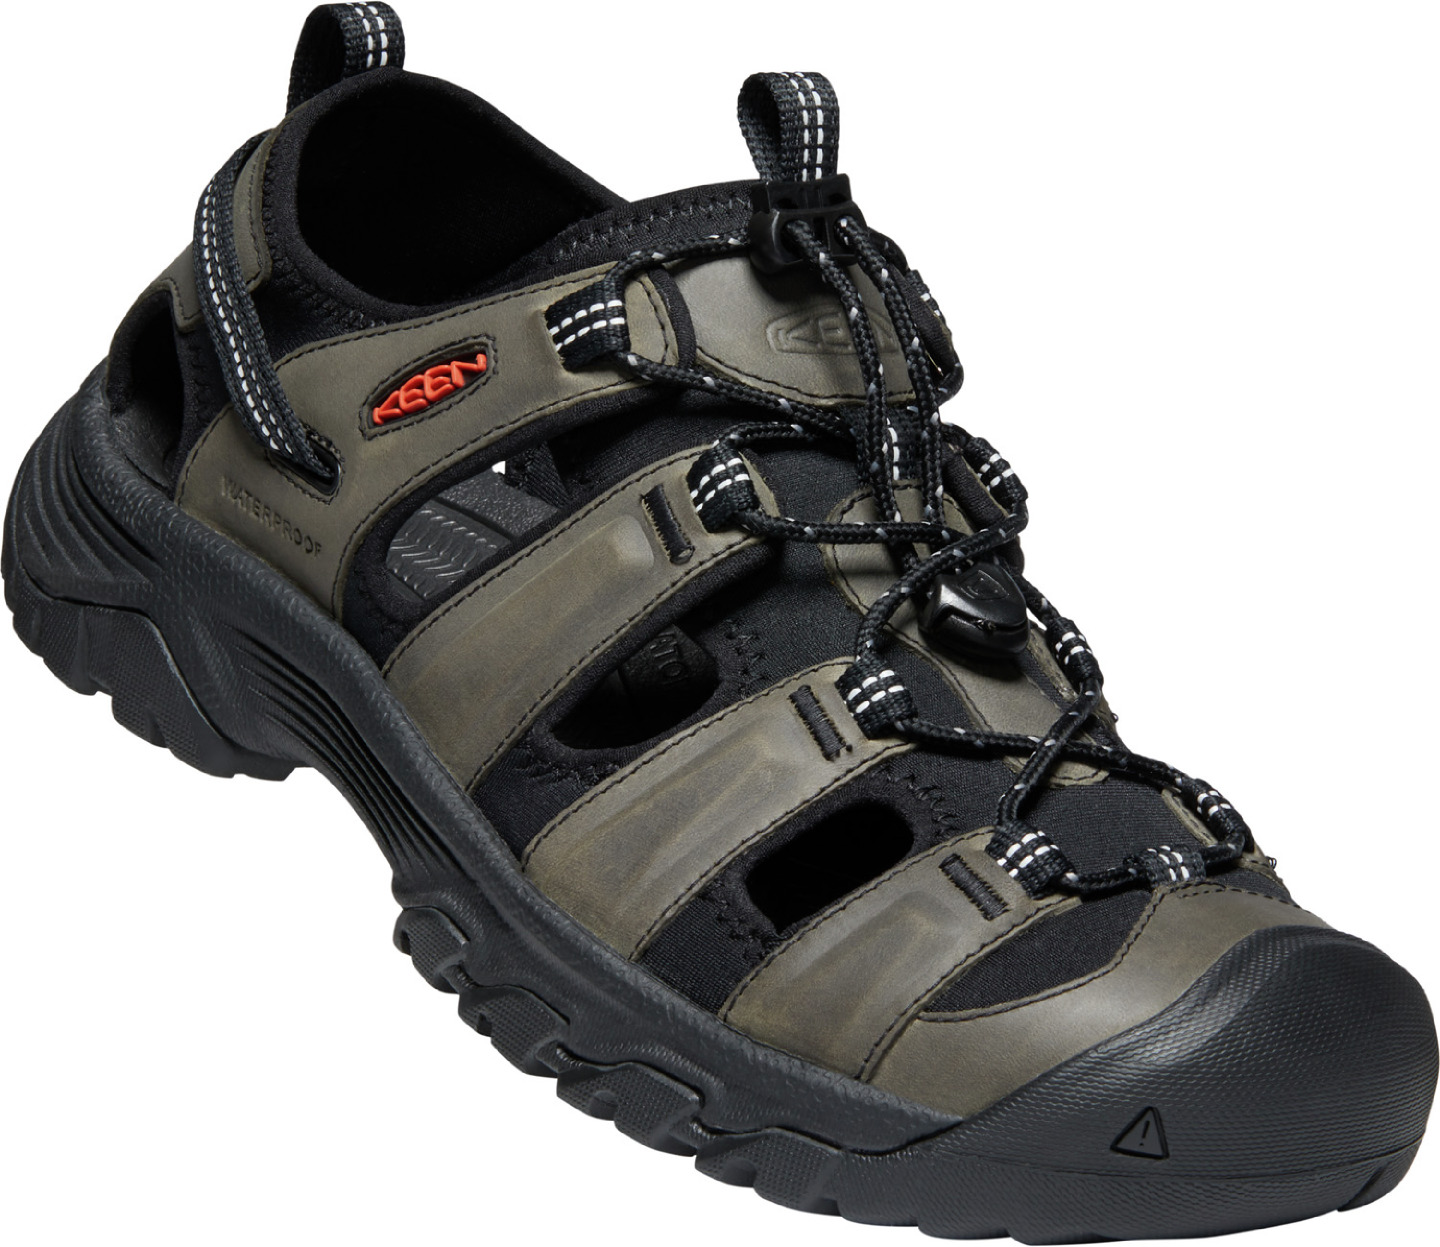 Keen pánské sandály Targhee III Sandal Men - Grey/Black Barva: Grey/Black, Velikost: 11 UK (46 EU / 30 cm)